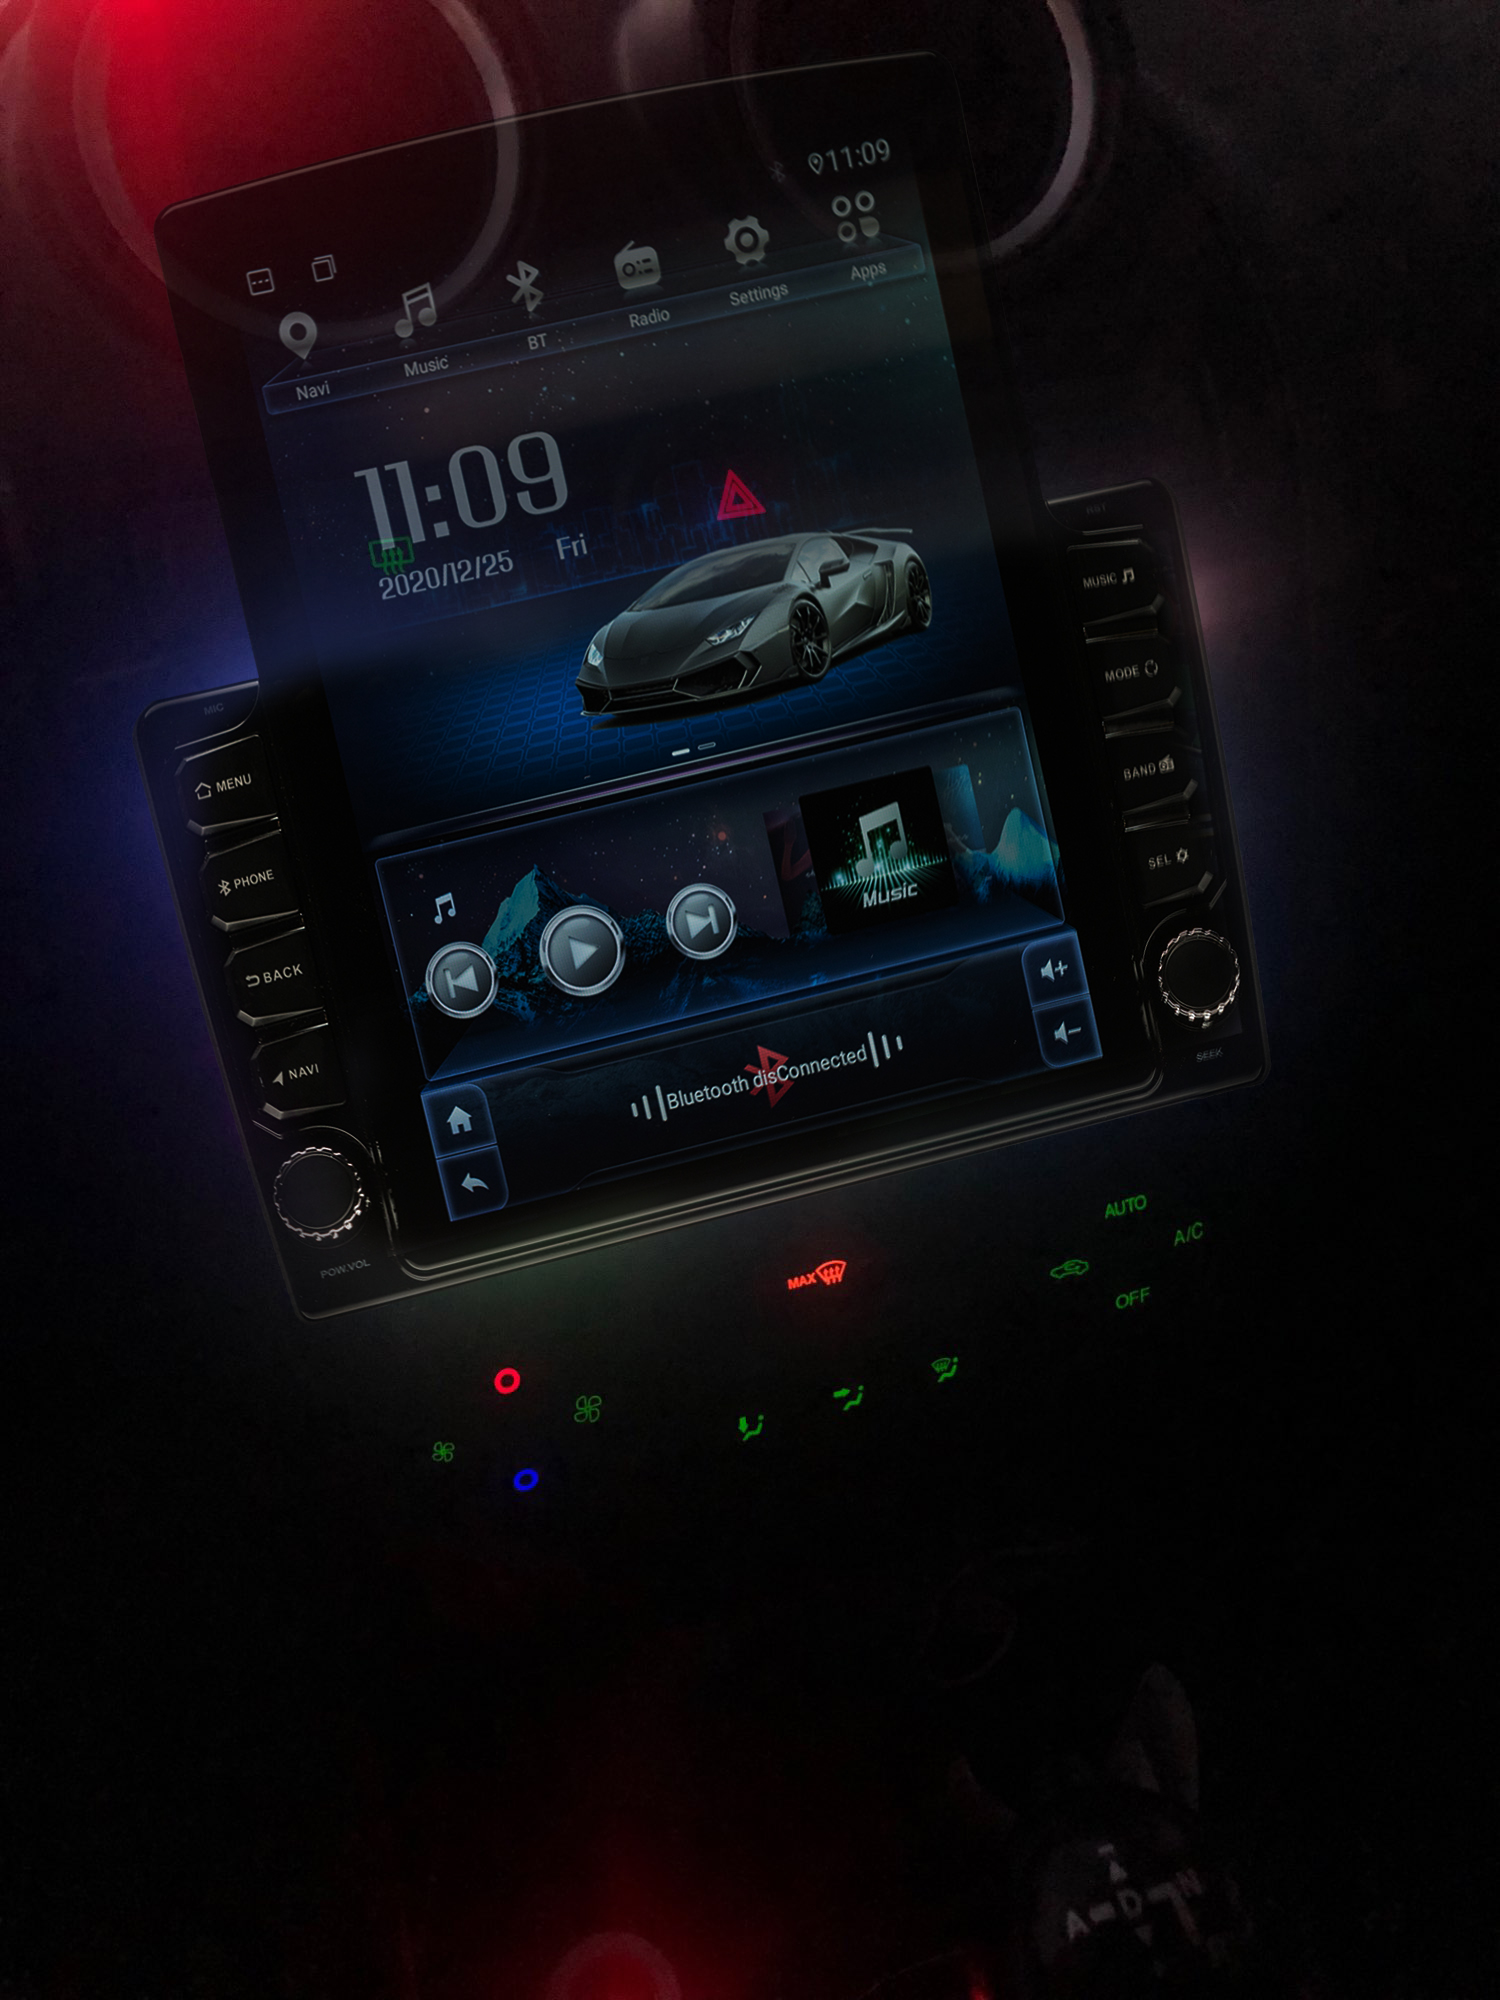 Navigatie AUTONAV Android GPS Dedicata Ford Fiesta 2002-2008, Model XPERT Memorie 64GB Stocare, 4GB DDR3 RAM, Display Vertical Stil Tesla 10" Full-Touch, WiFi, 2 x USB, Bluetooth, 4G, Octa-Core 8 * 1.3GHz, 4 * 50W Audio